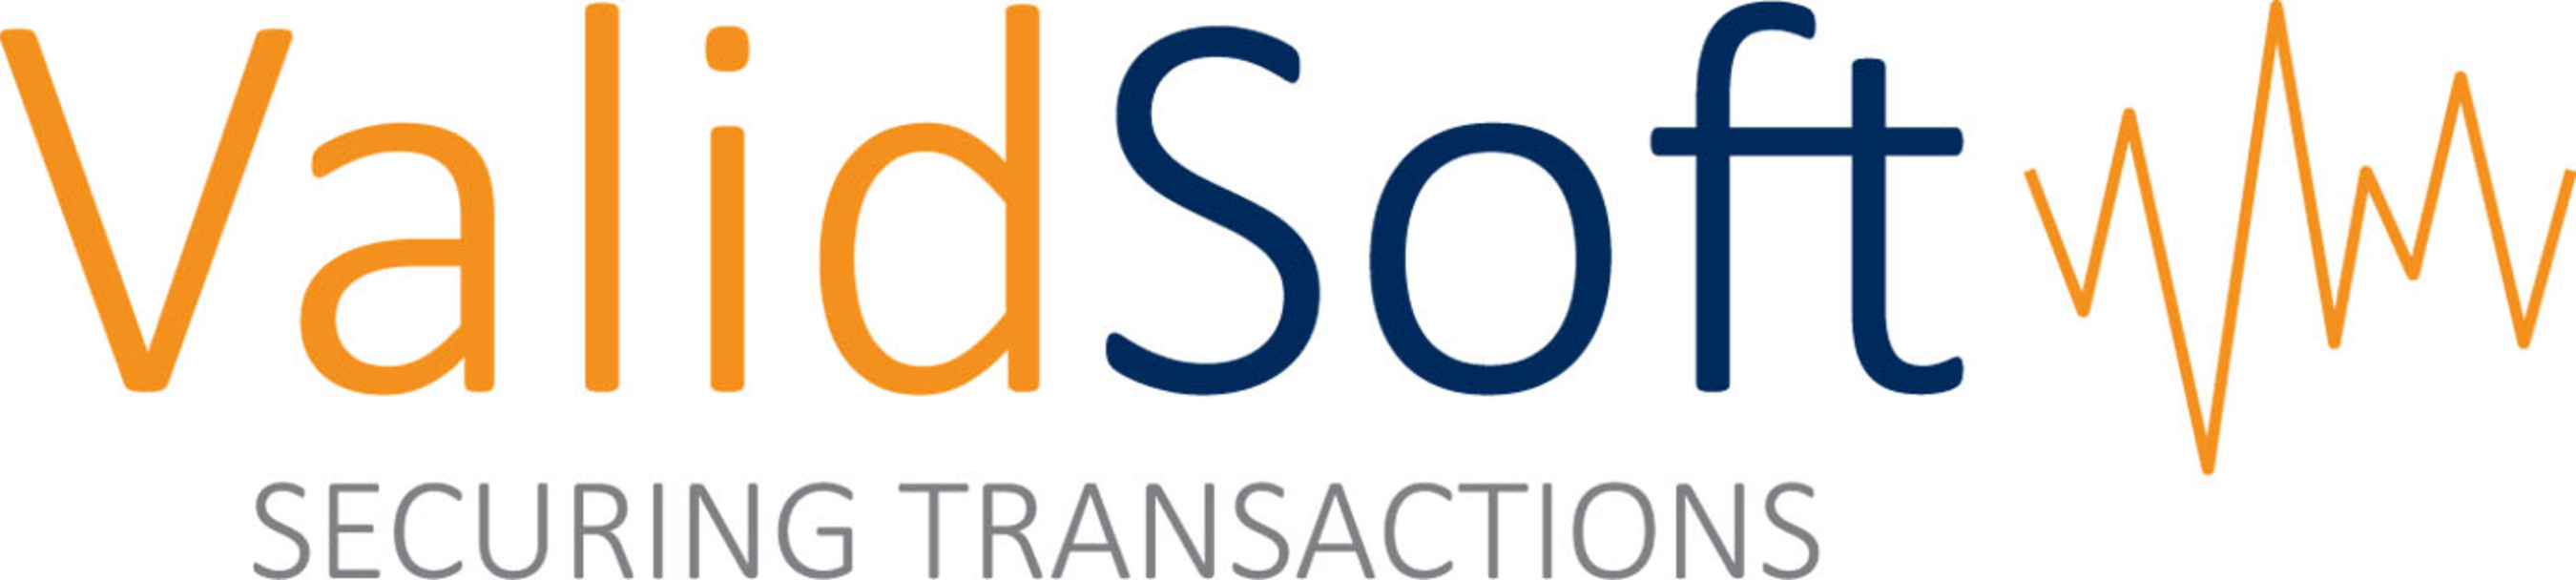 ValidSoft's logo.